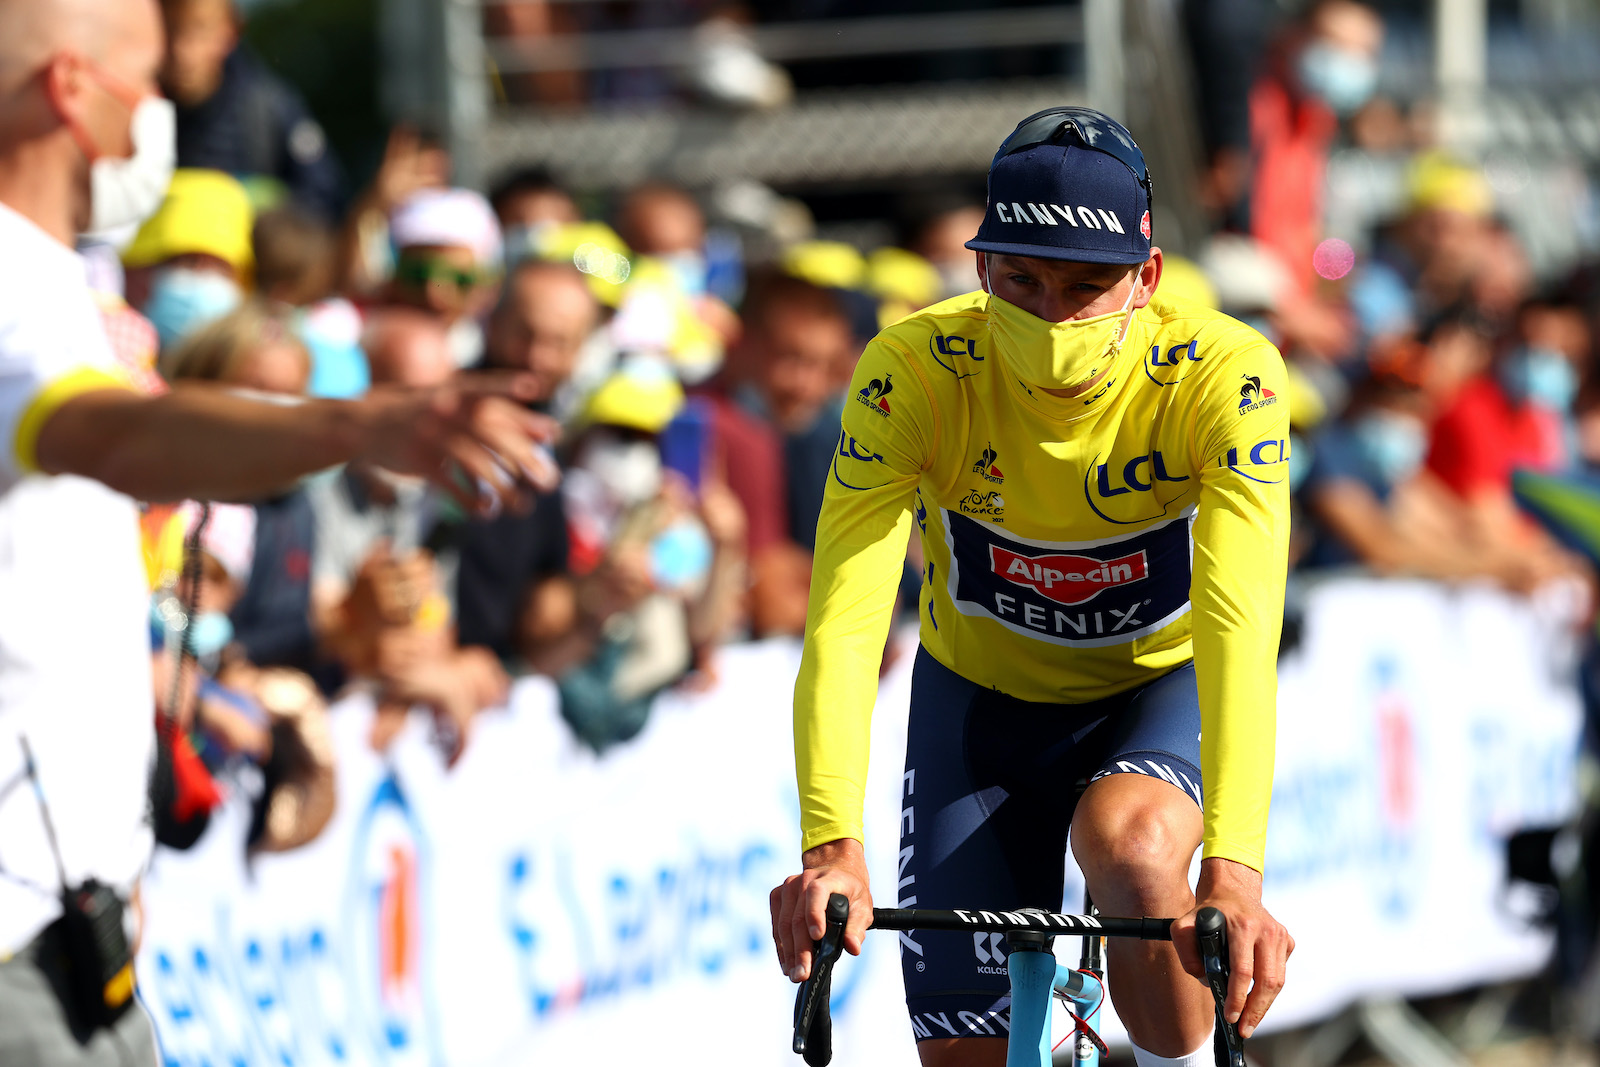 Shipley undskyld Alfabet Tour de France: Ny mand i gul trøje og mundbind